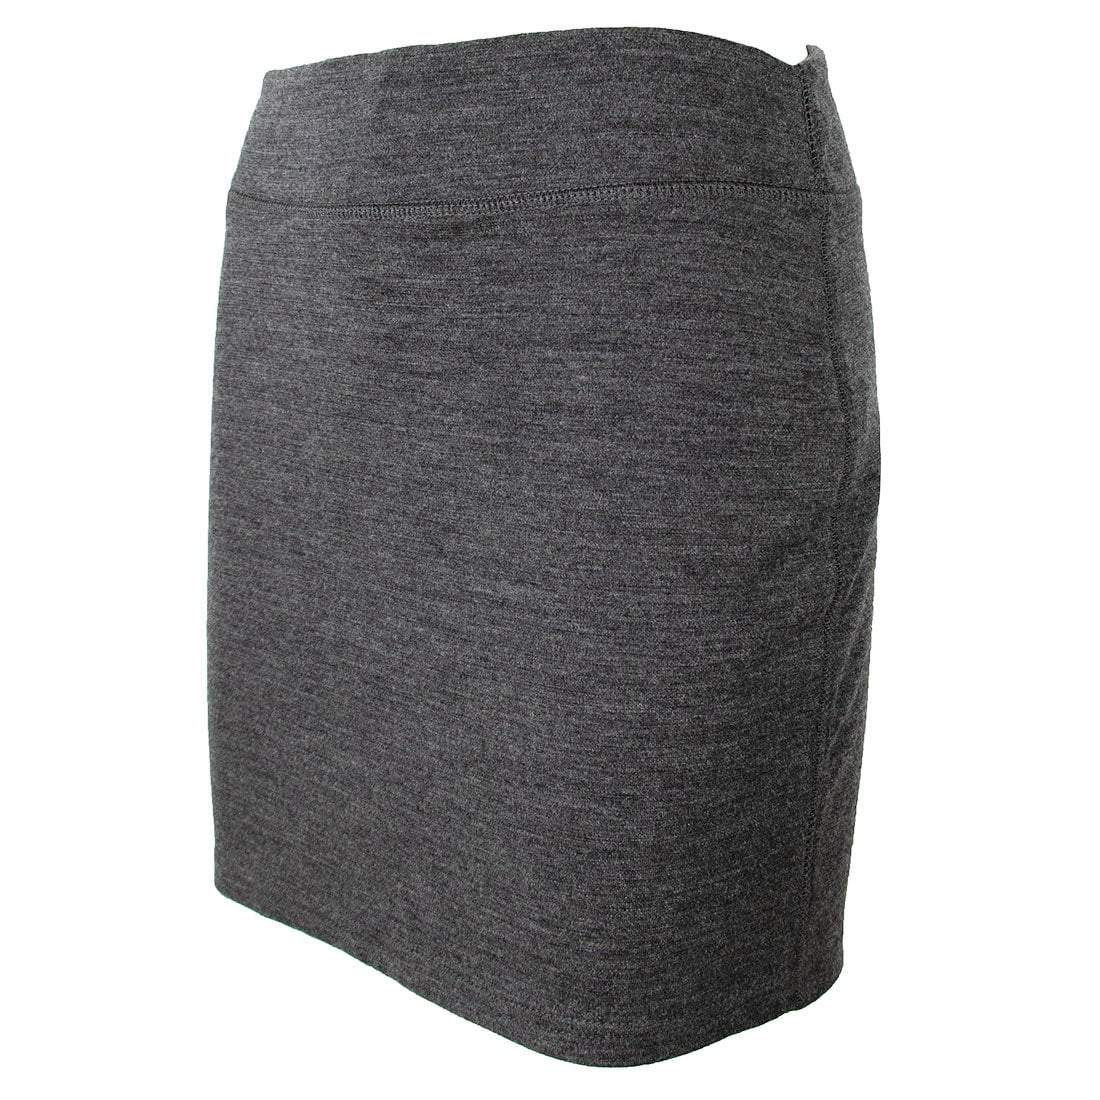 Merino Wool Pencil Skirt -Made In Ely, MN